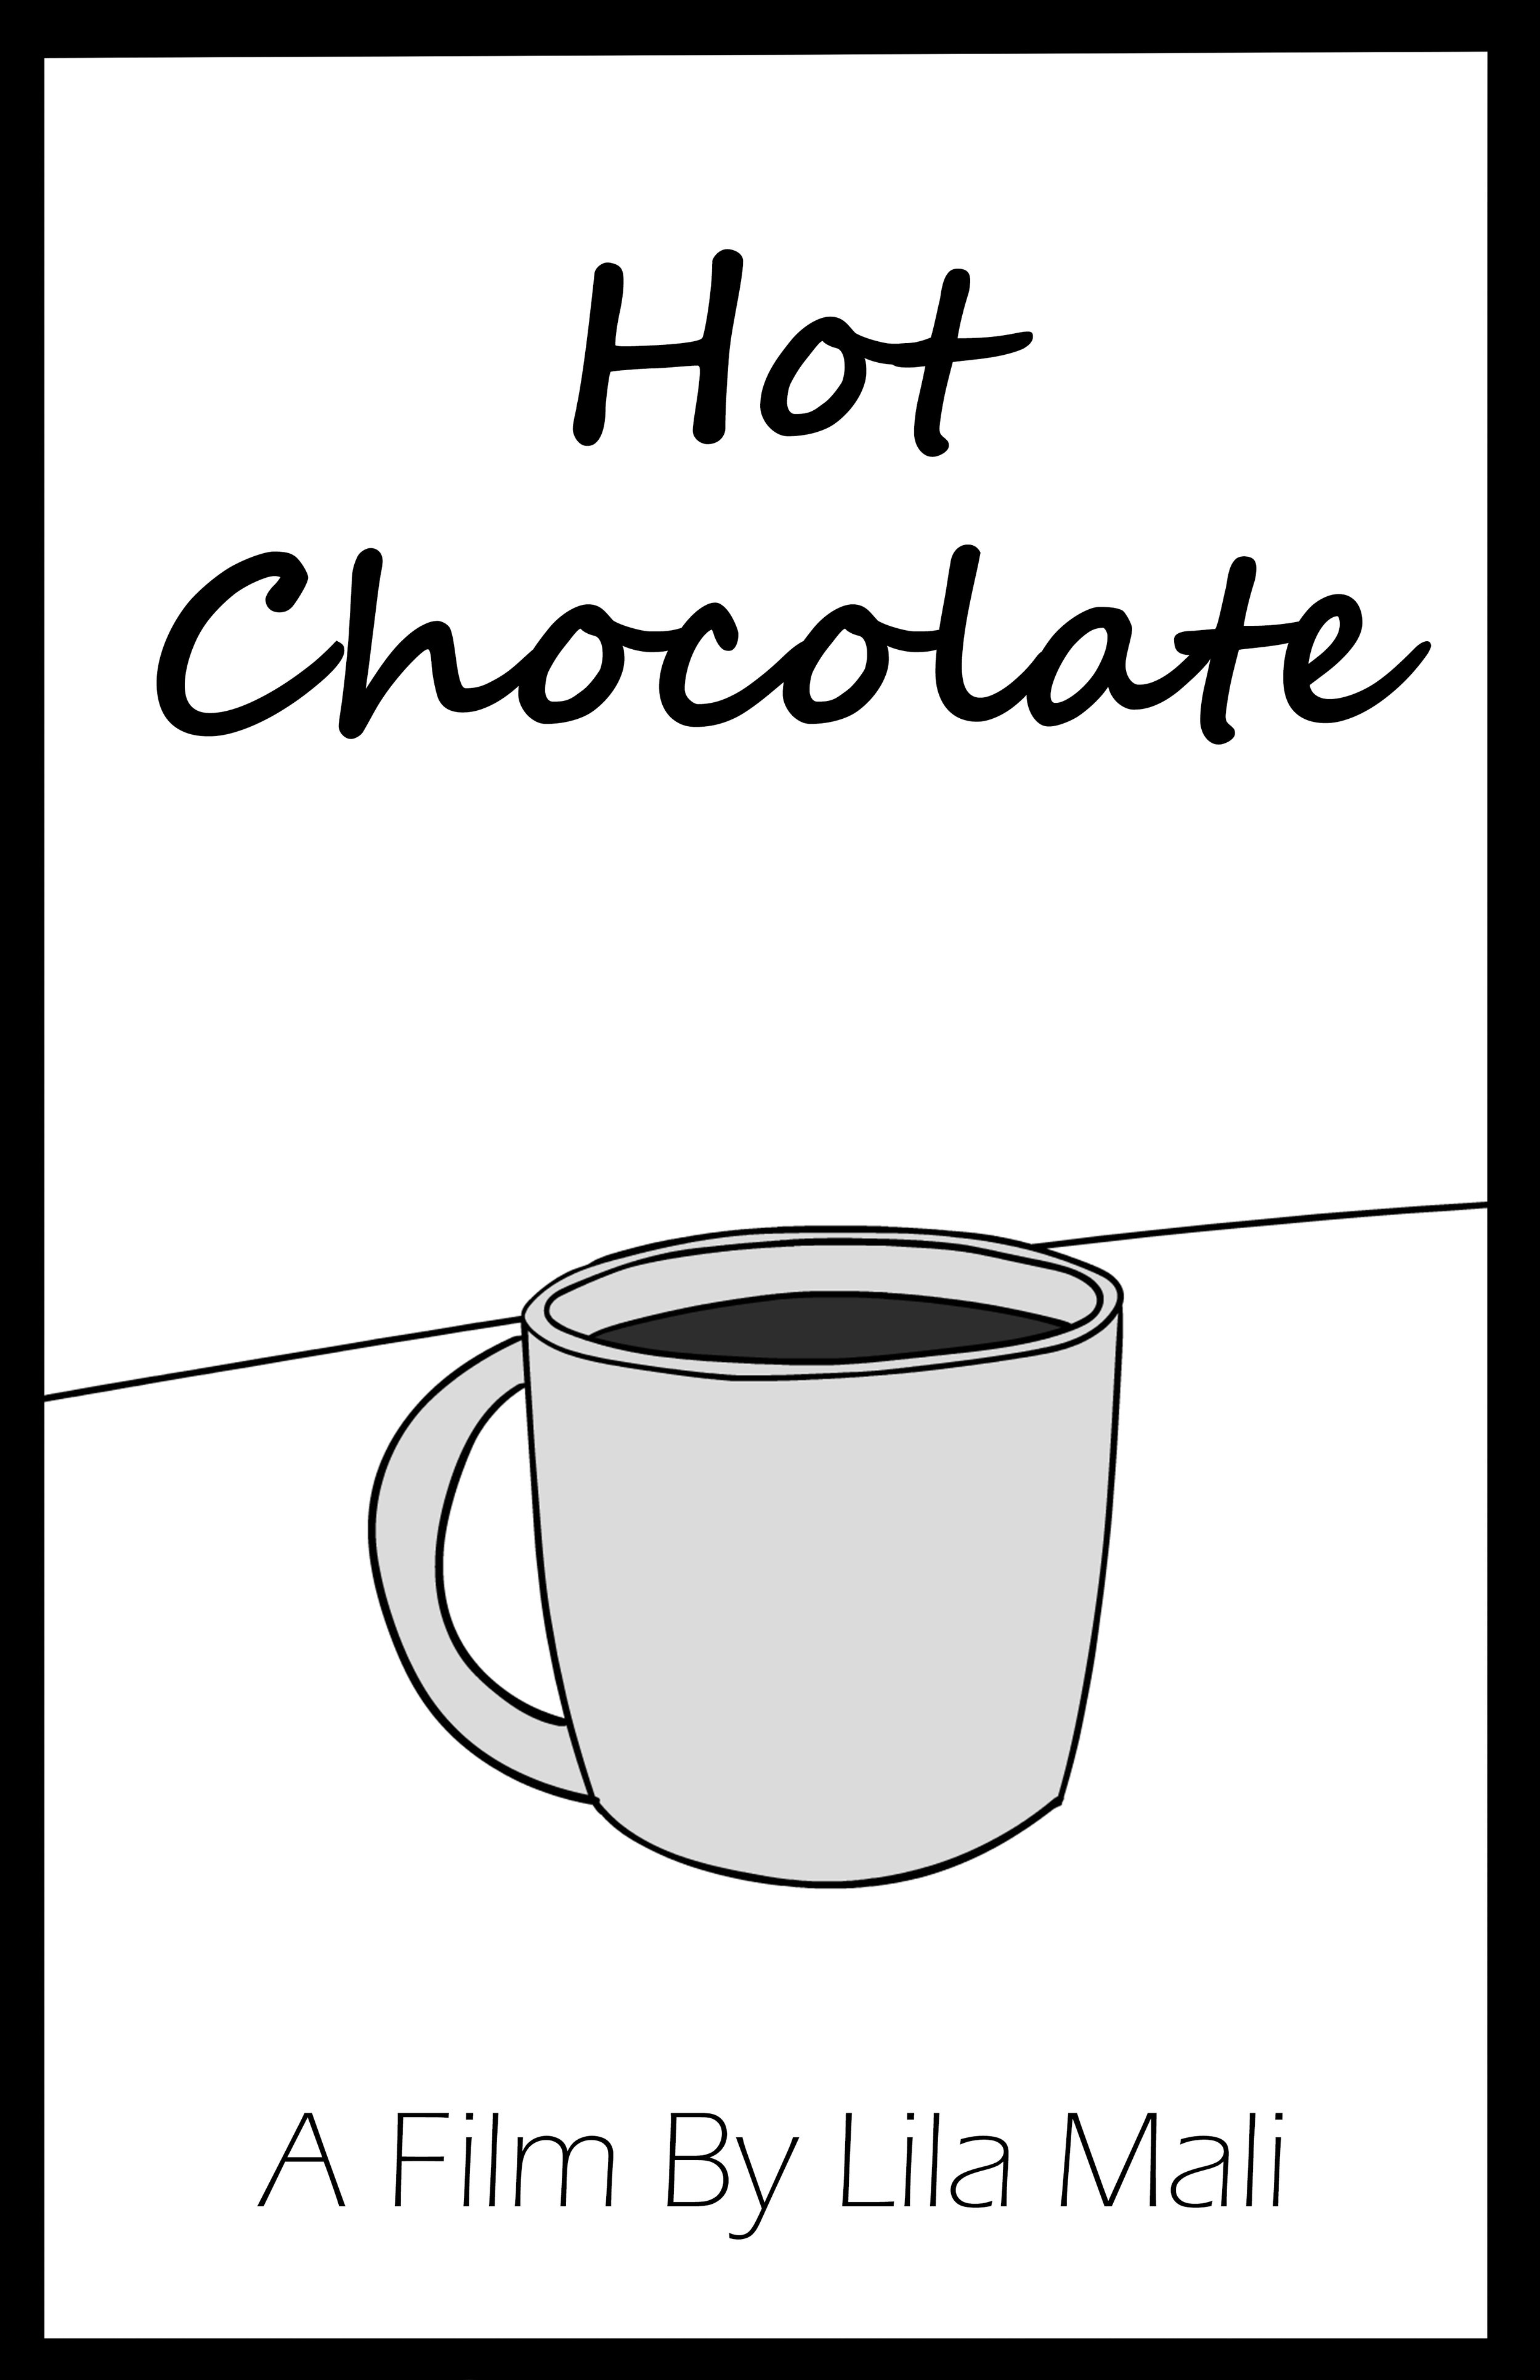 Hot Chocolate poster border.jpg